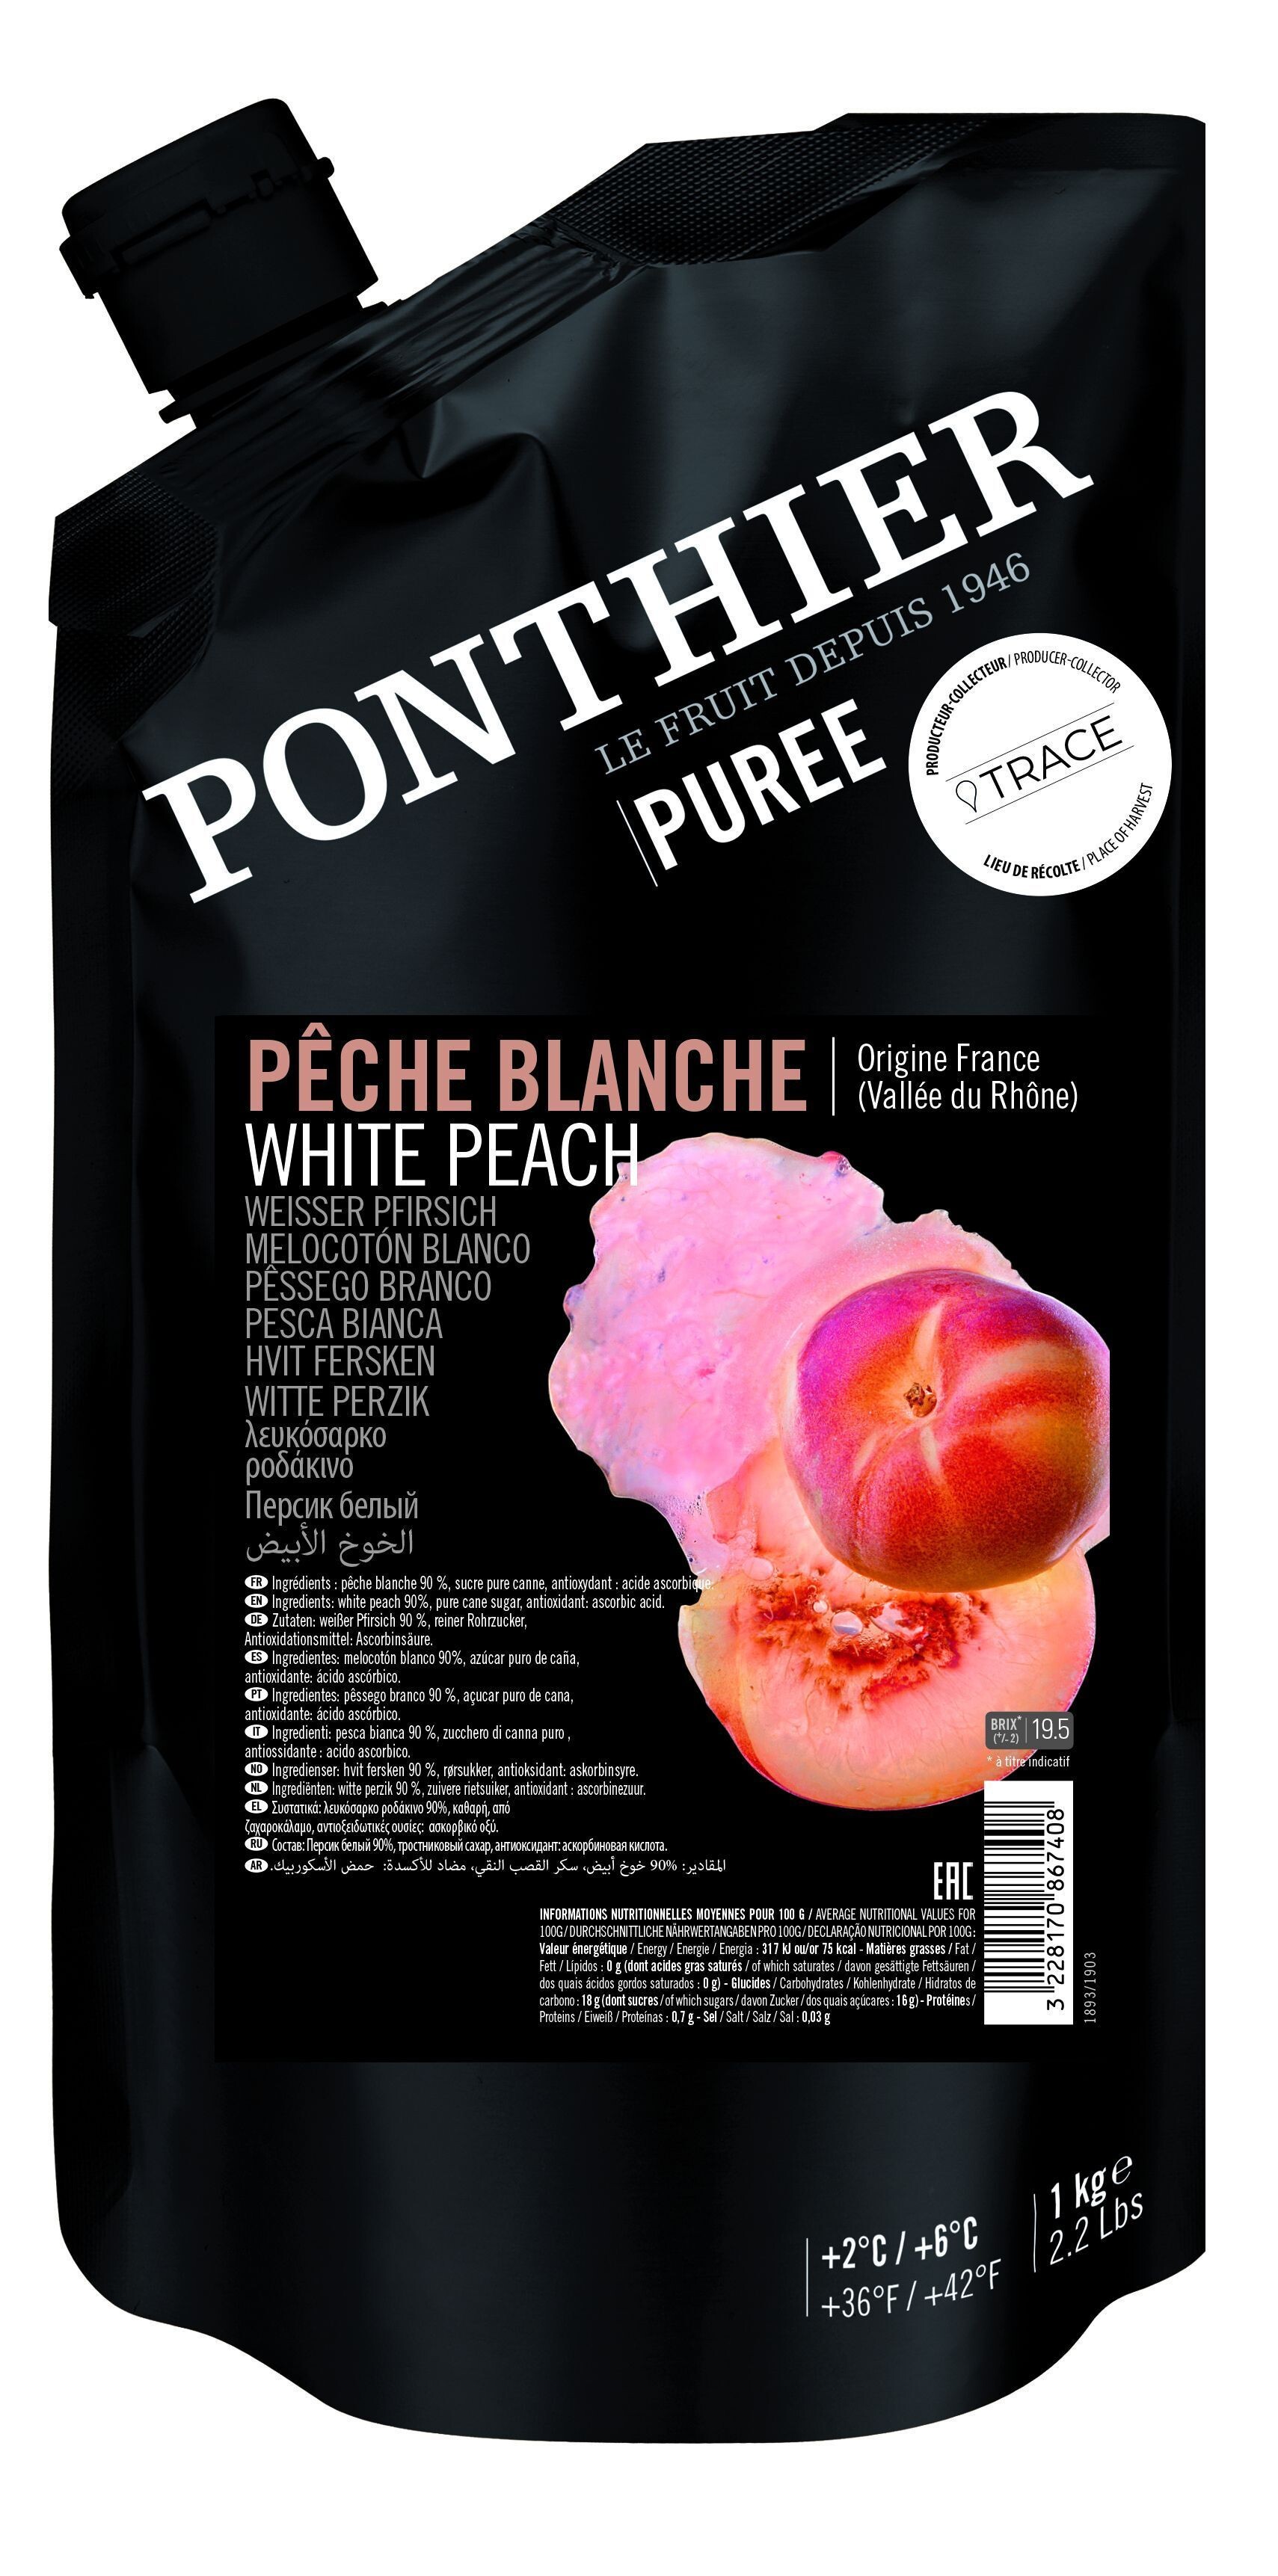 Ponthier Fruit Puree White Peach 1kg